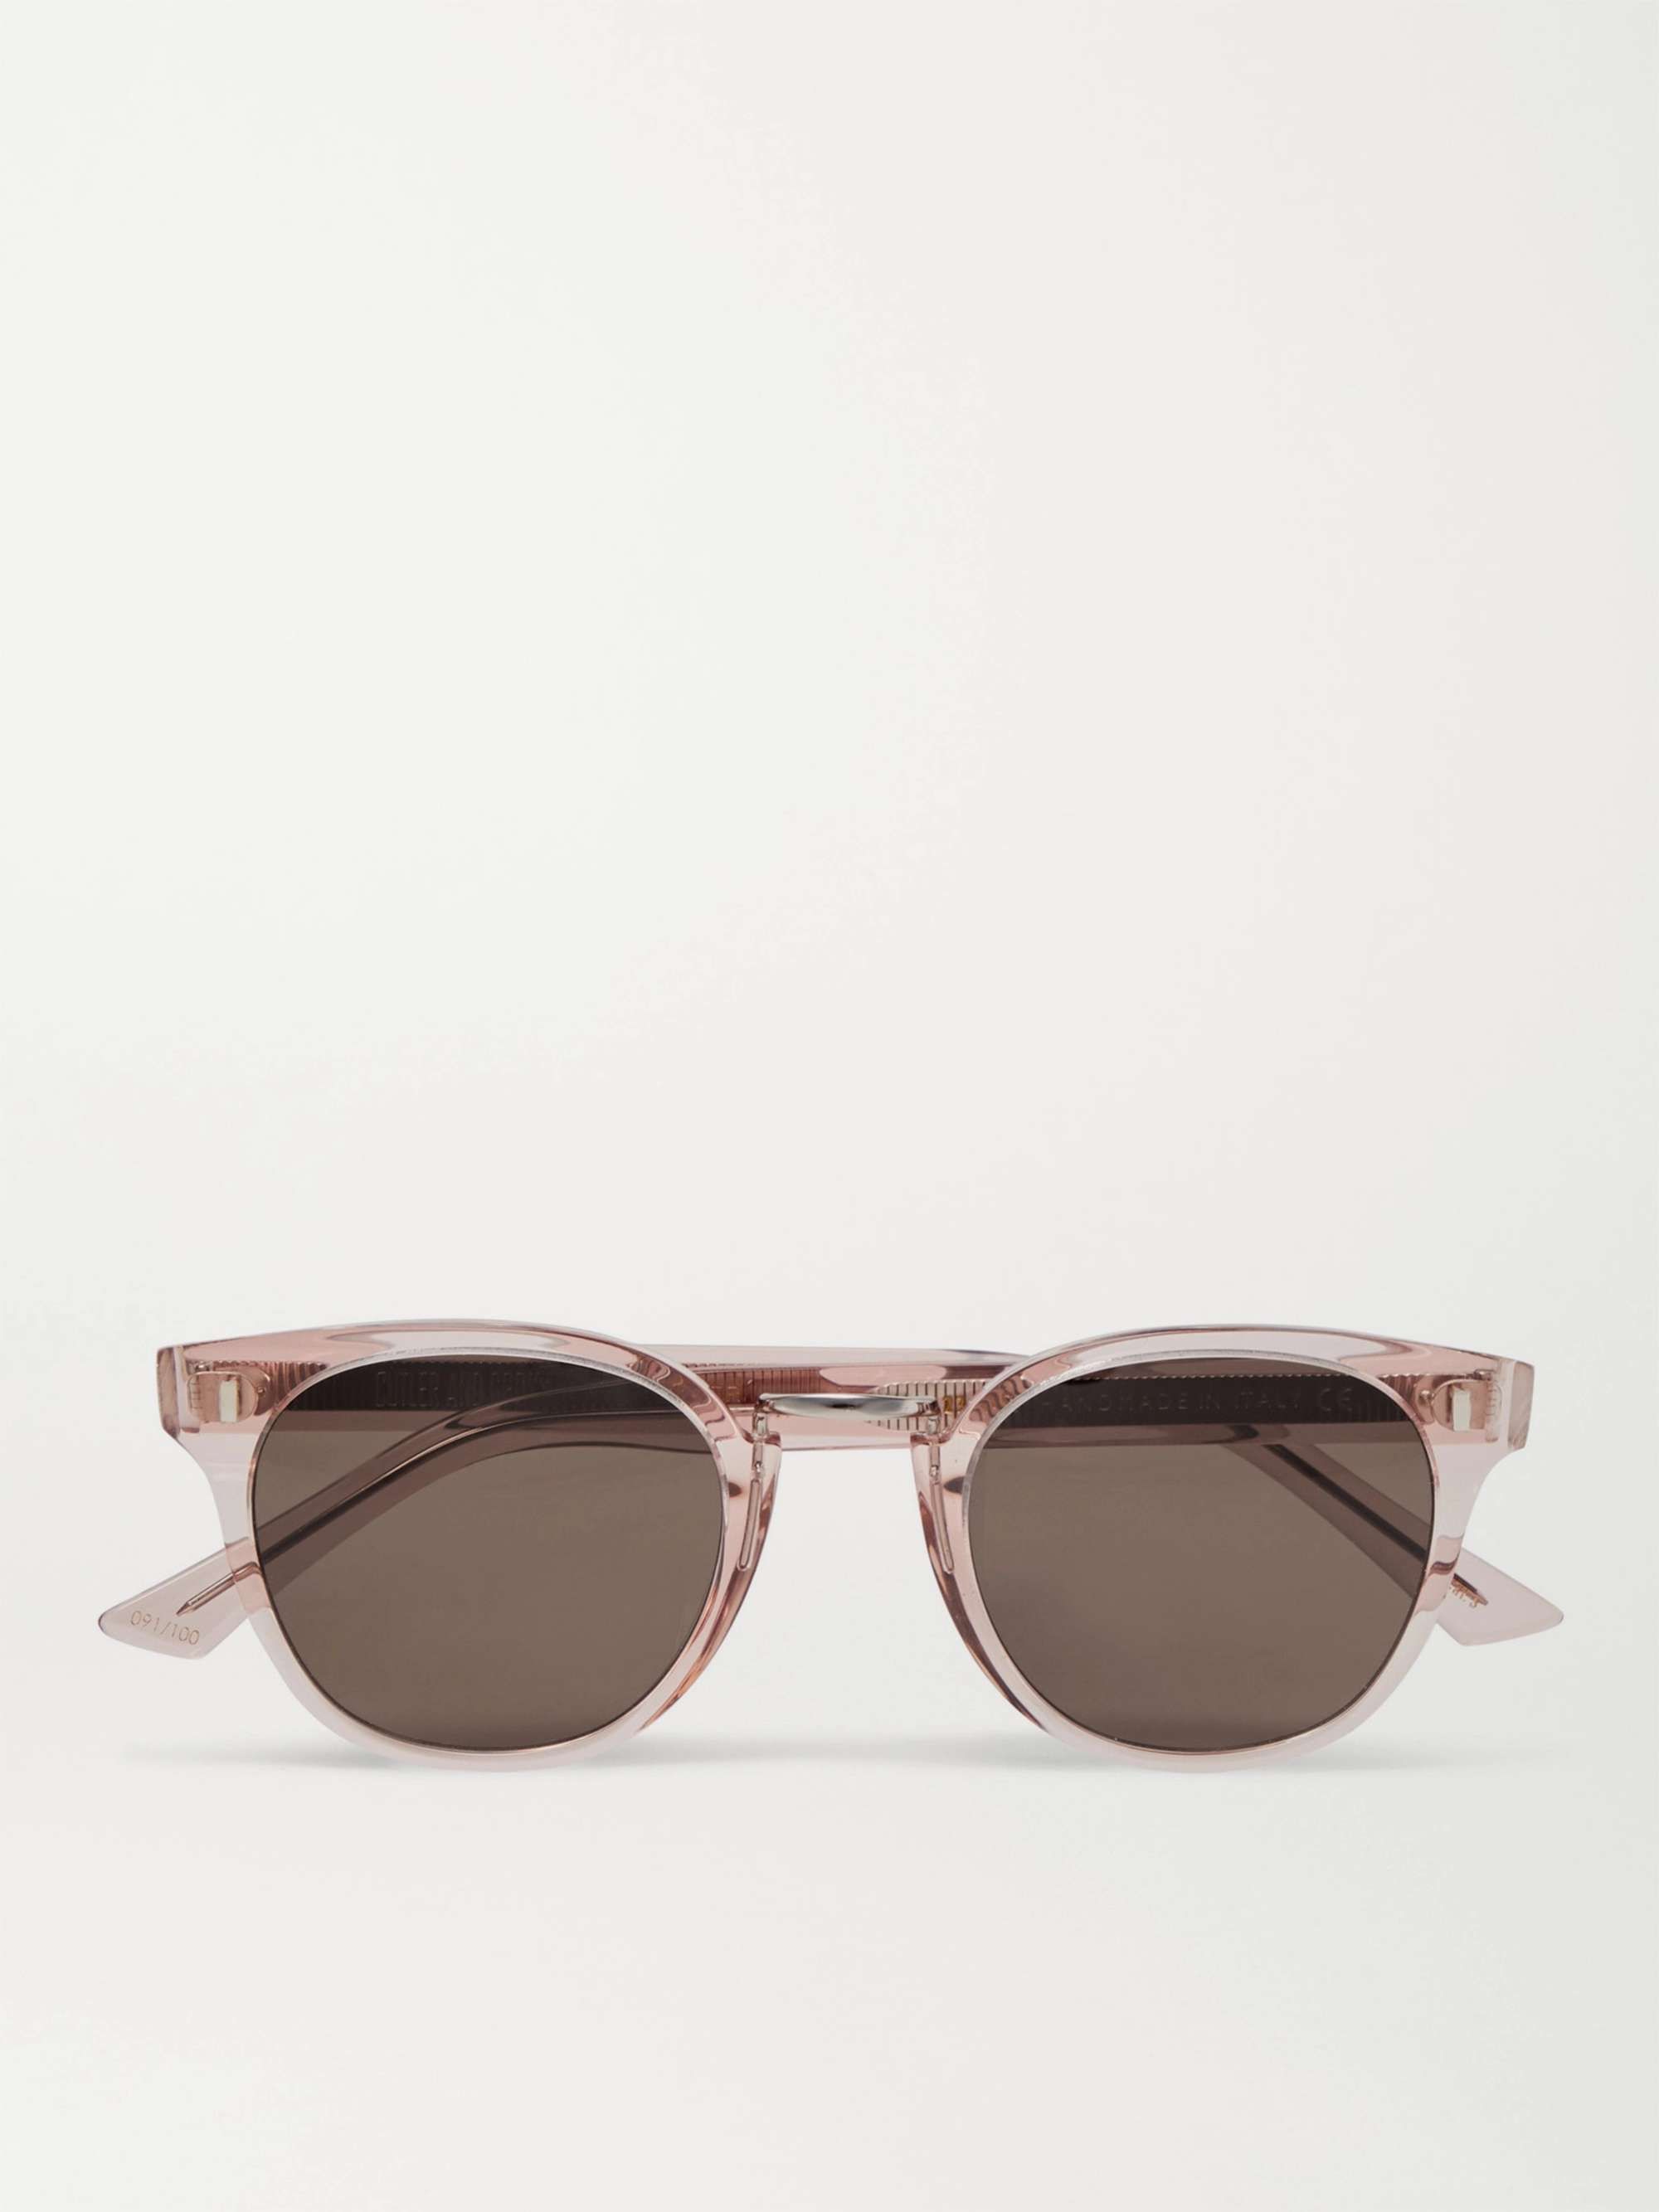 Orange St Germain Round-Frame Tortoiseshell Acetate Sunglasses 